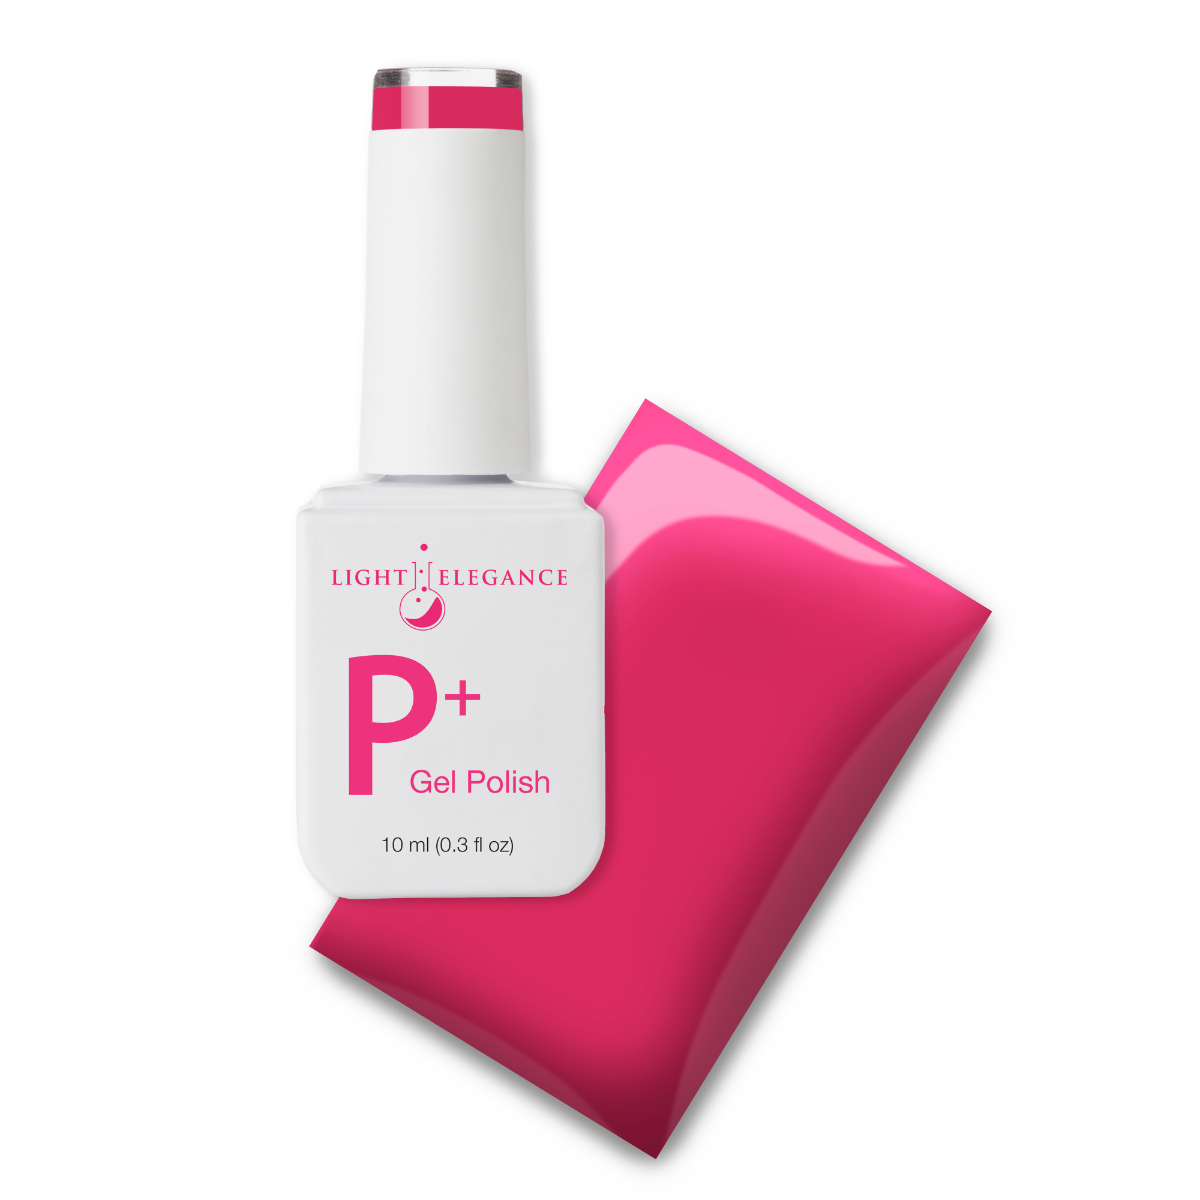 Light Elegance Spring P+ Gel Polish Bundle - Creata Beauty - Professional Beauty Products